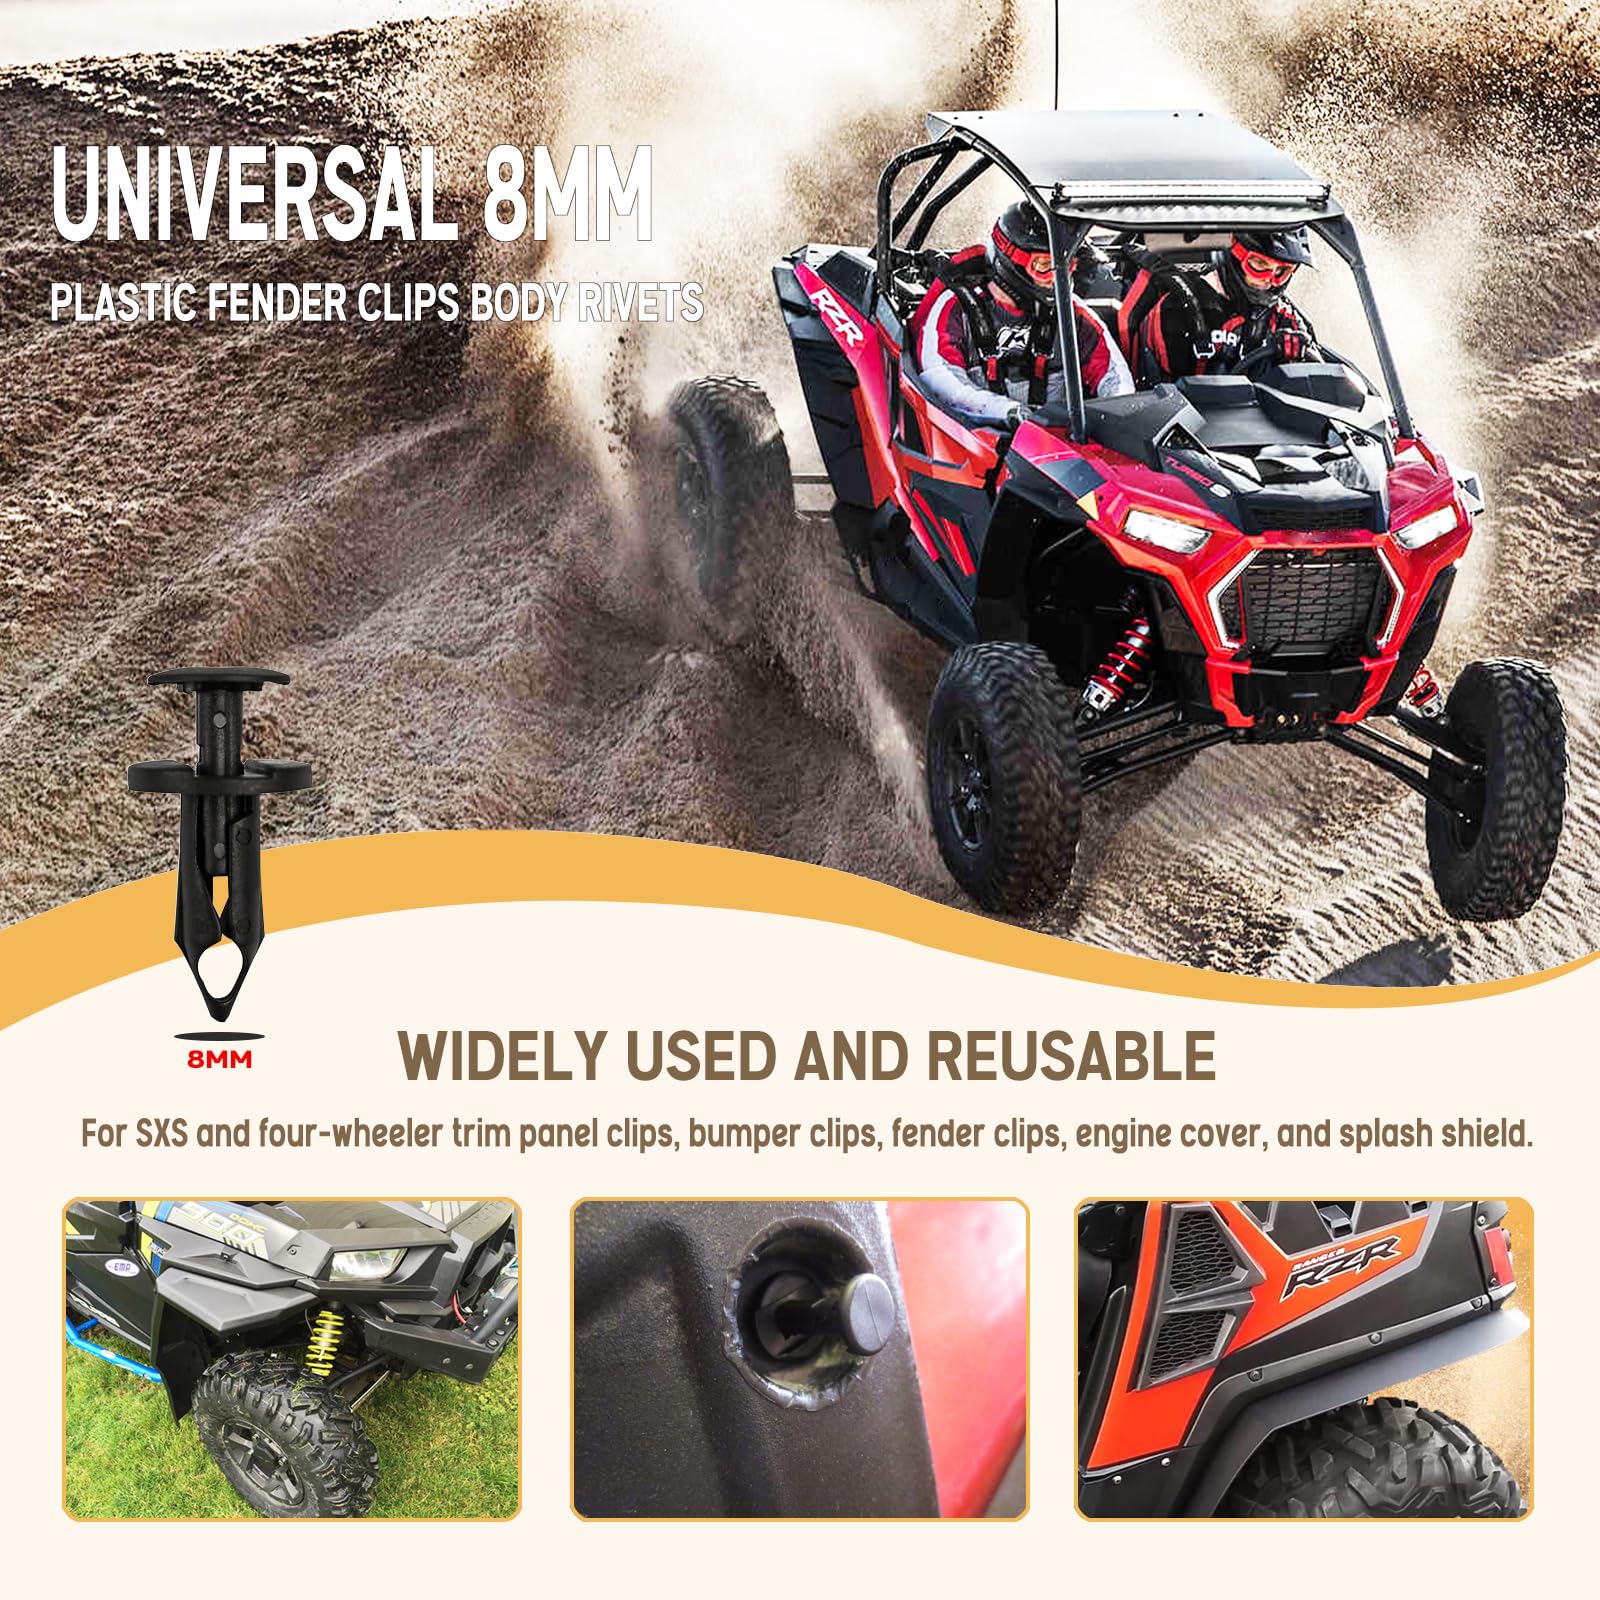 UNIGT 150pcs ATV UTV Body Fastener Rivets Push Pin Compatible with Can Am 293150089 Polaris 7661855 RZR Ranger Suzuki Kawasaki Rancher 90653-HC4-900 Plastic Fender Clips